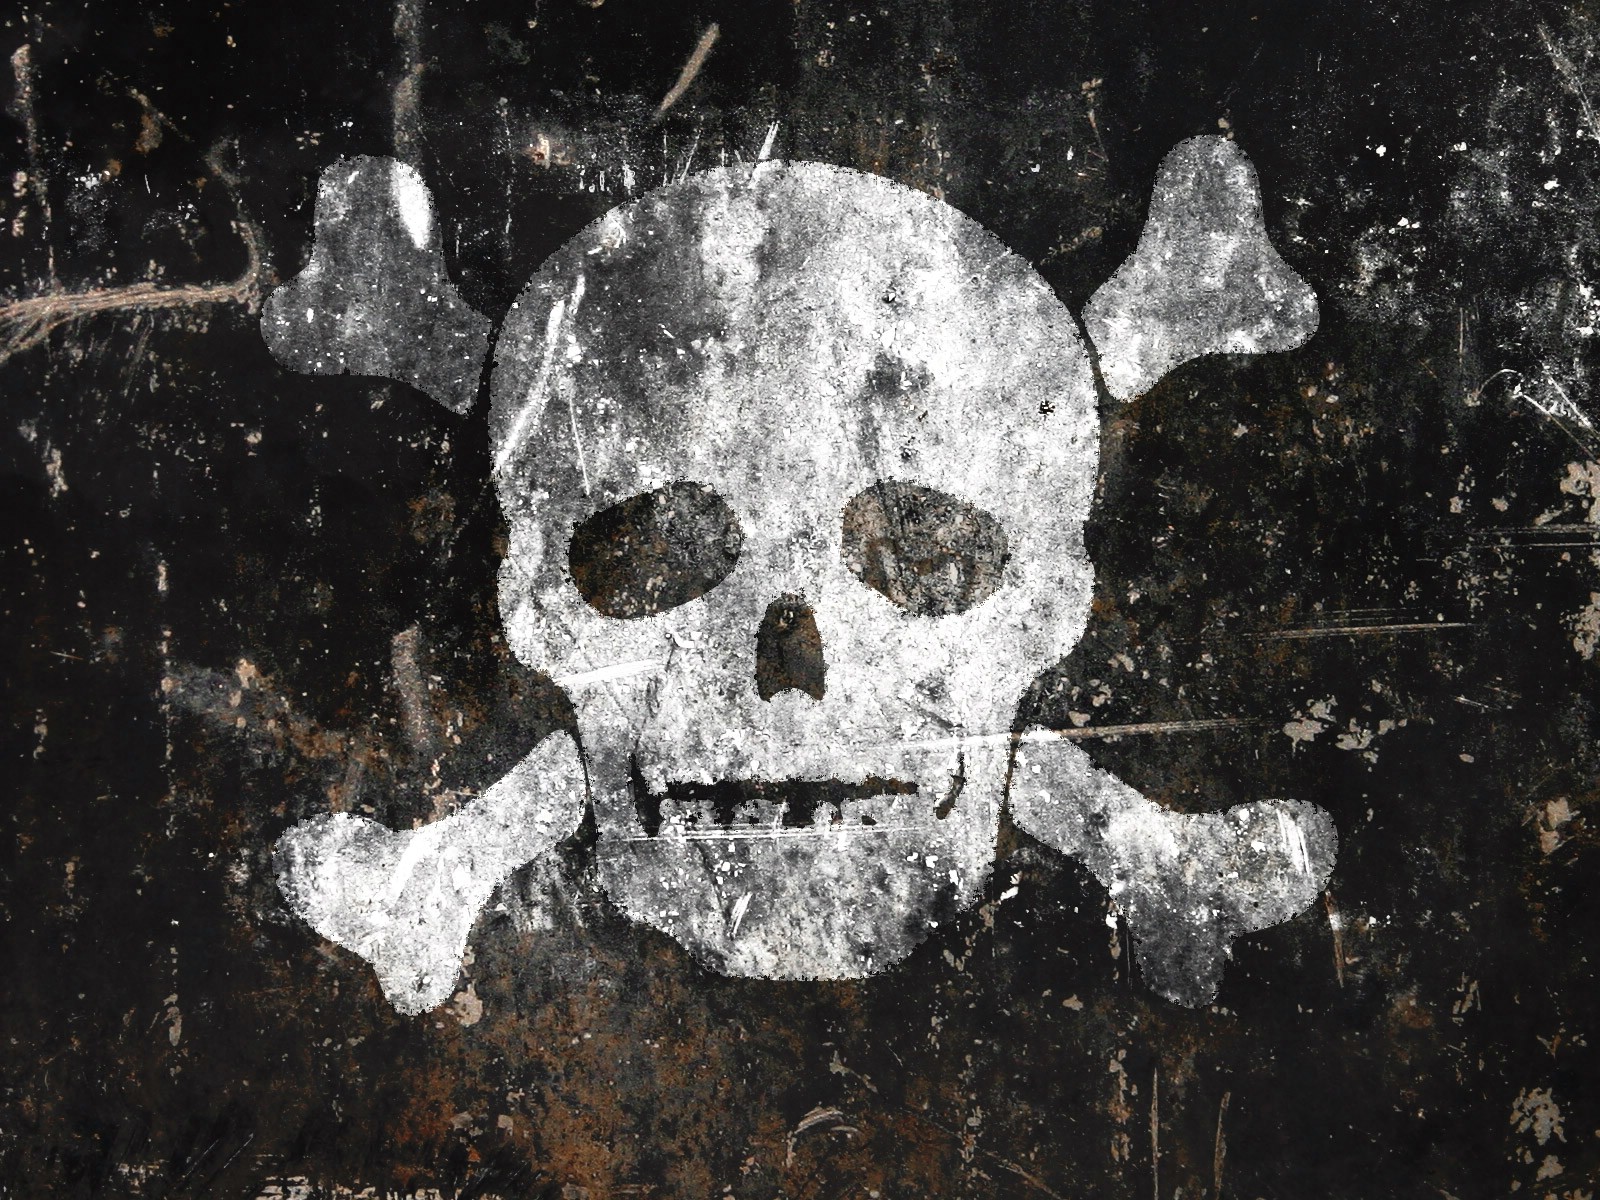 https://blogger.googleusercontent.com/img/b/R29vZ2xl/AVvXsEj9WfN5ATT5n5sLZbaciJM7oDKqEwmUzIWHXxnN97lADEAxBi6Mxsh6NGR66jLAX8A78rSPdsmQhNdZPCx0xYMLa4exMTSO2kJoPiZafVfVoWHiJYMSsIKclQpE2JN859VOBU6O_WkARSKc/s1600/Old+Pirate+Skull+_+Dark-Wallpaper.Blogspot.Com.jpg